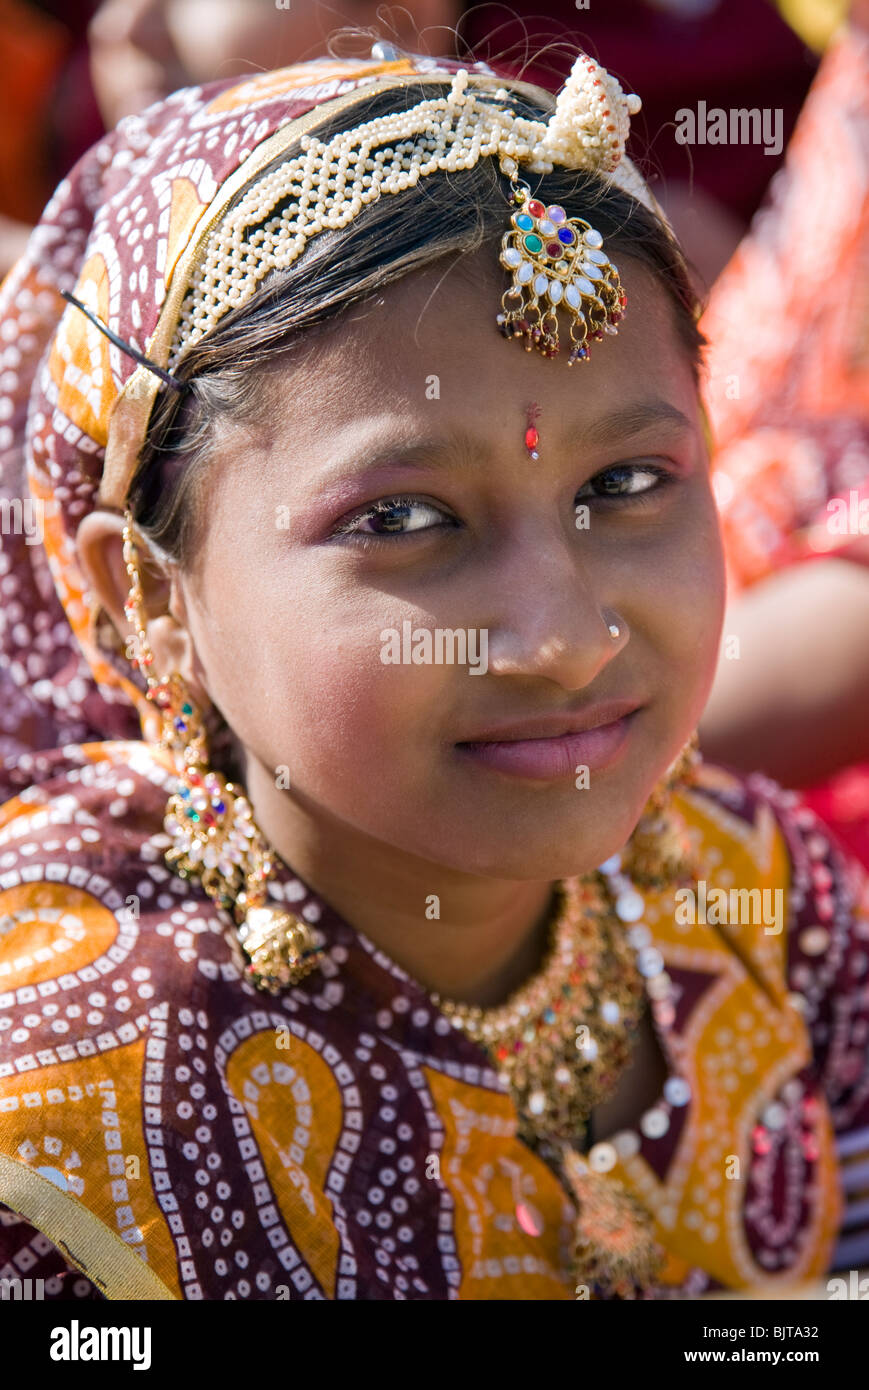 Indian girl pushkar rajasthan india hi-res stock photography and images -  Alamy